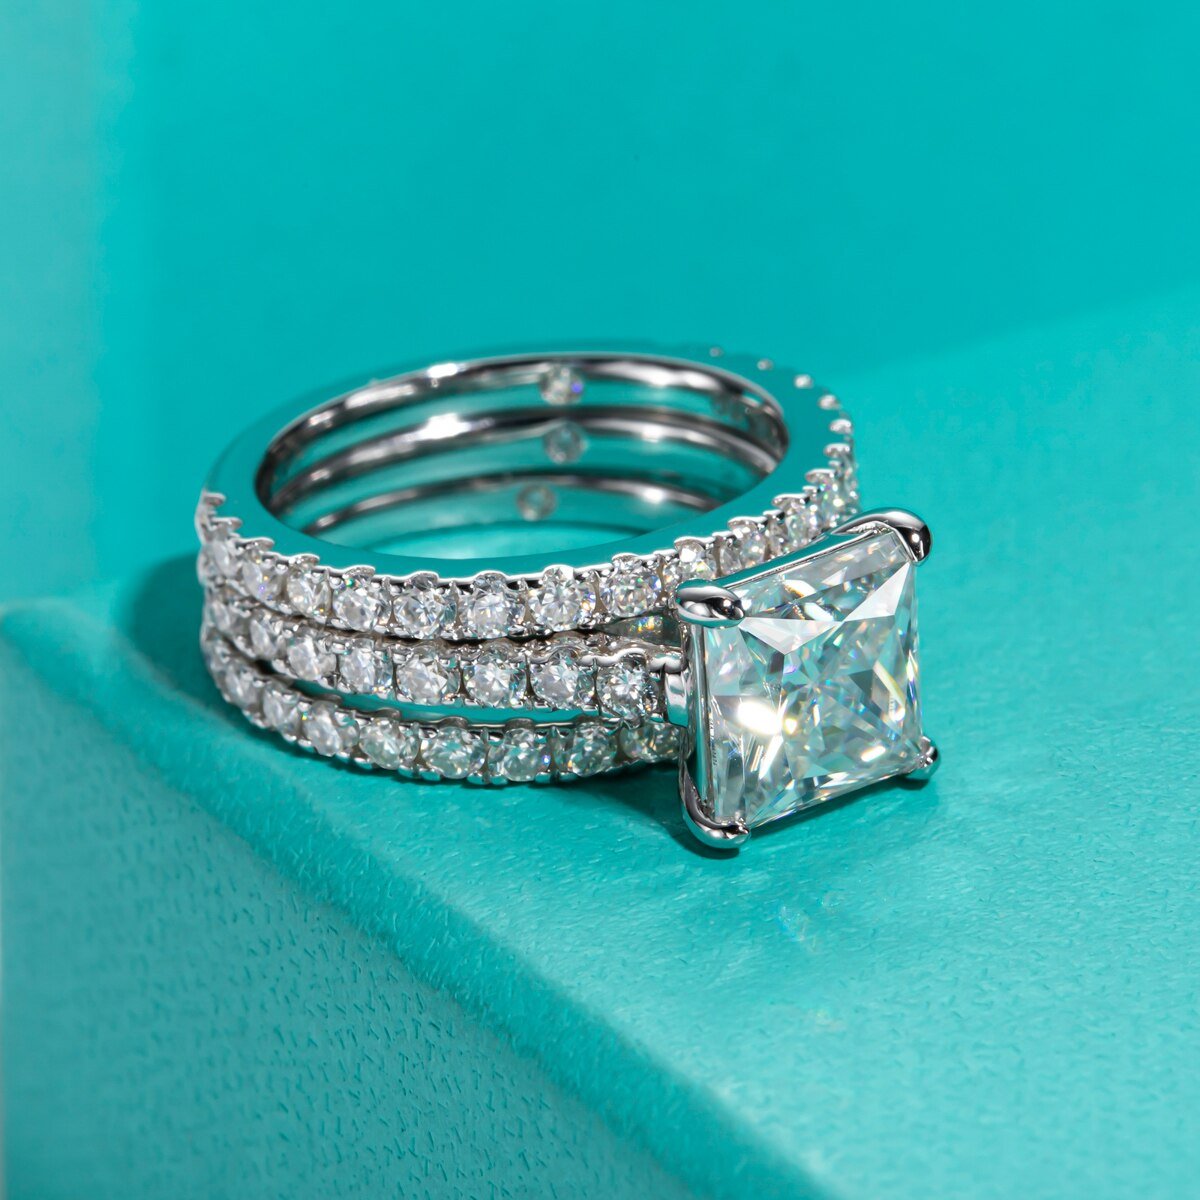 3ct Princess Cut Diamond Engagement Ring Set-Black Diamonds New York